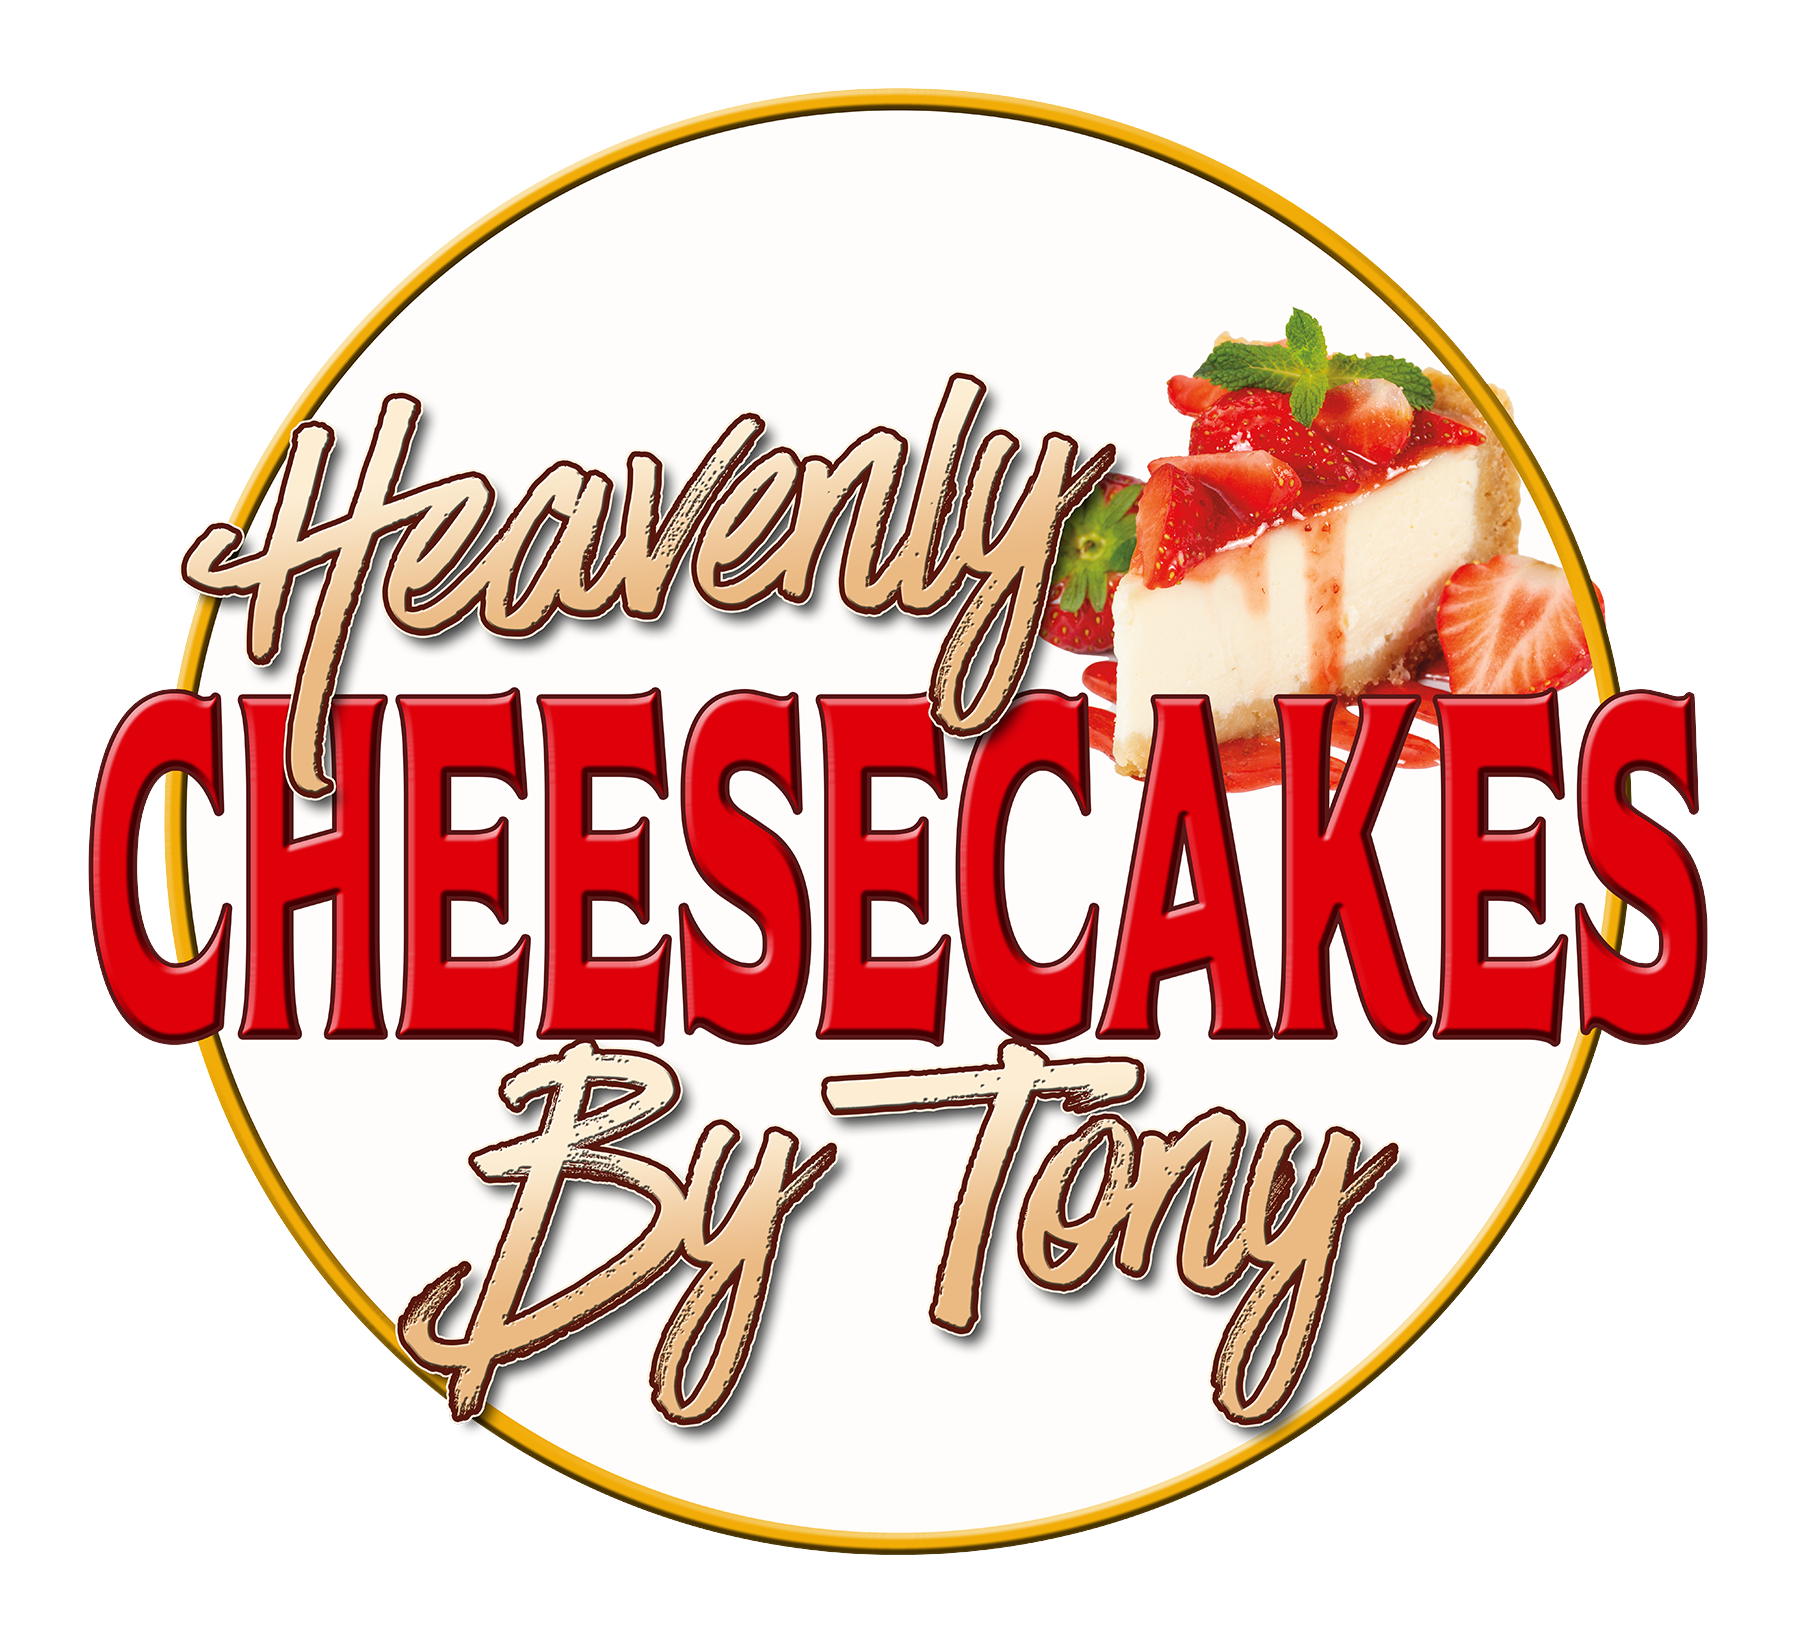 Heavenly Cheesecakes by Tony logo chs jerk fest